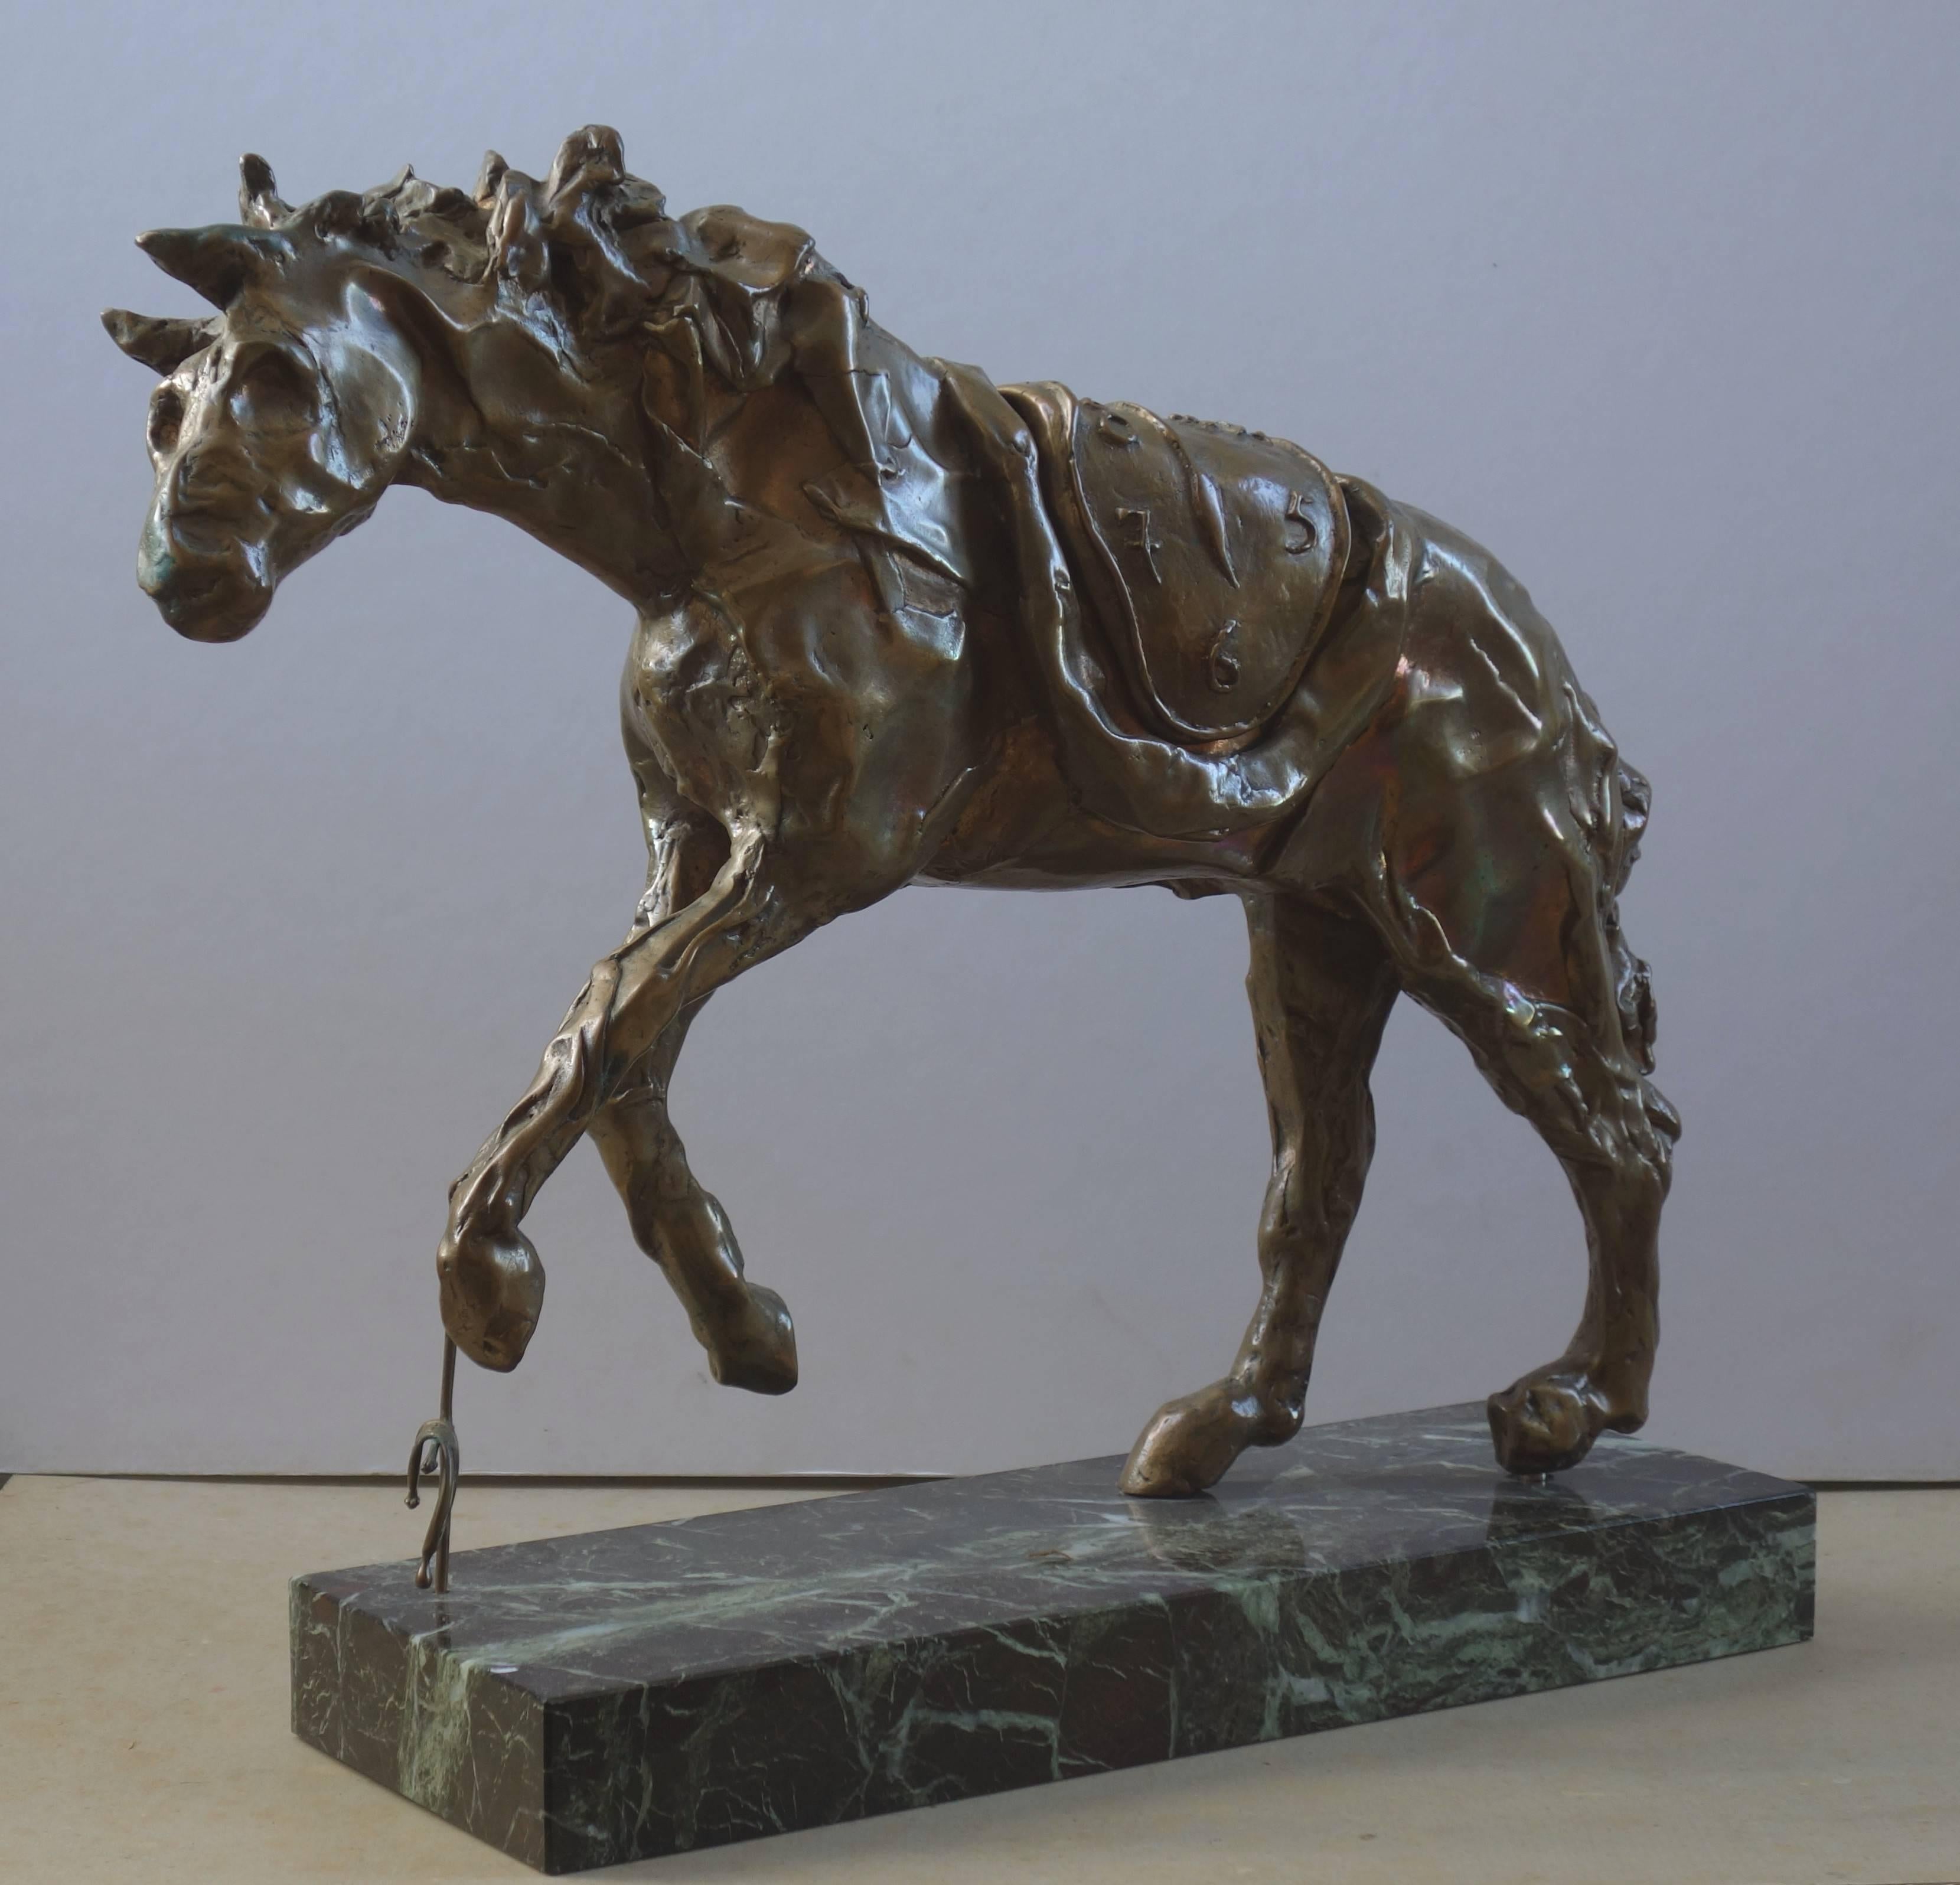 Salvador Dalí Figurative Sculpture - Horse with Molt Clock - Tall bronze sculpture - Signed /350ex